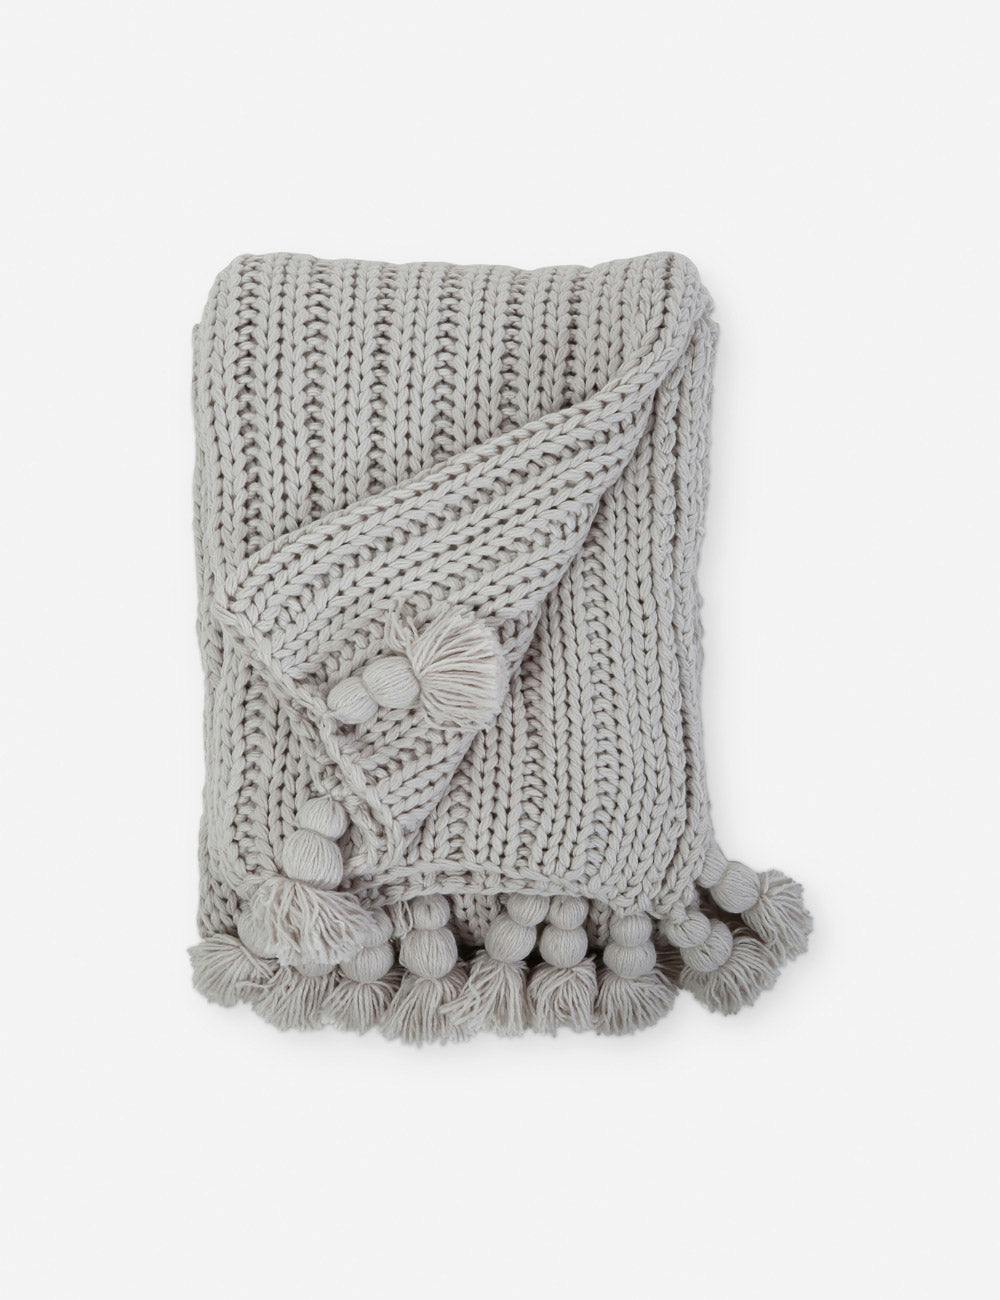 Anacapa Light Gray Chunky Knit Oversized Throw with Tassels